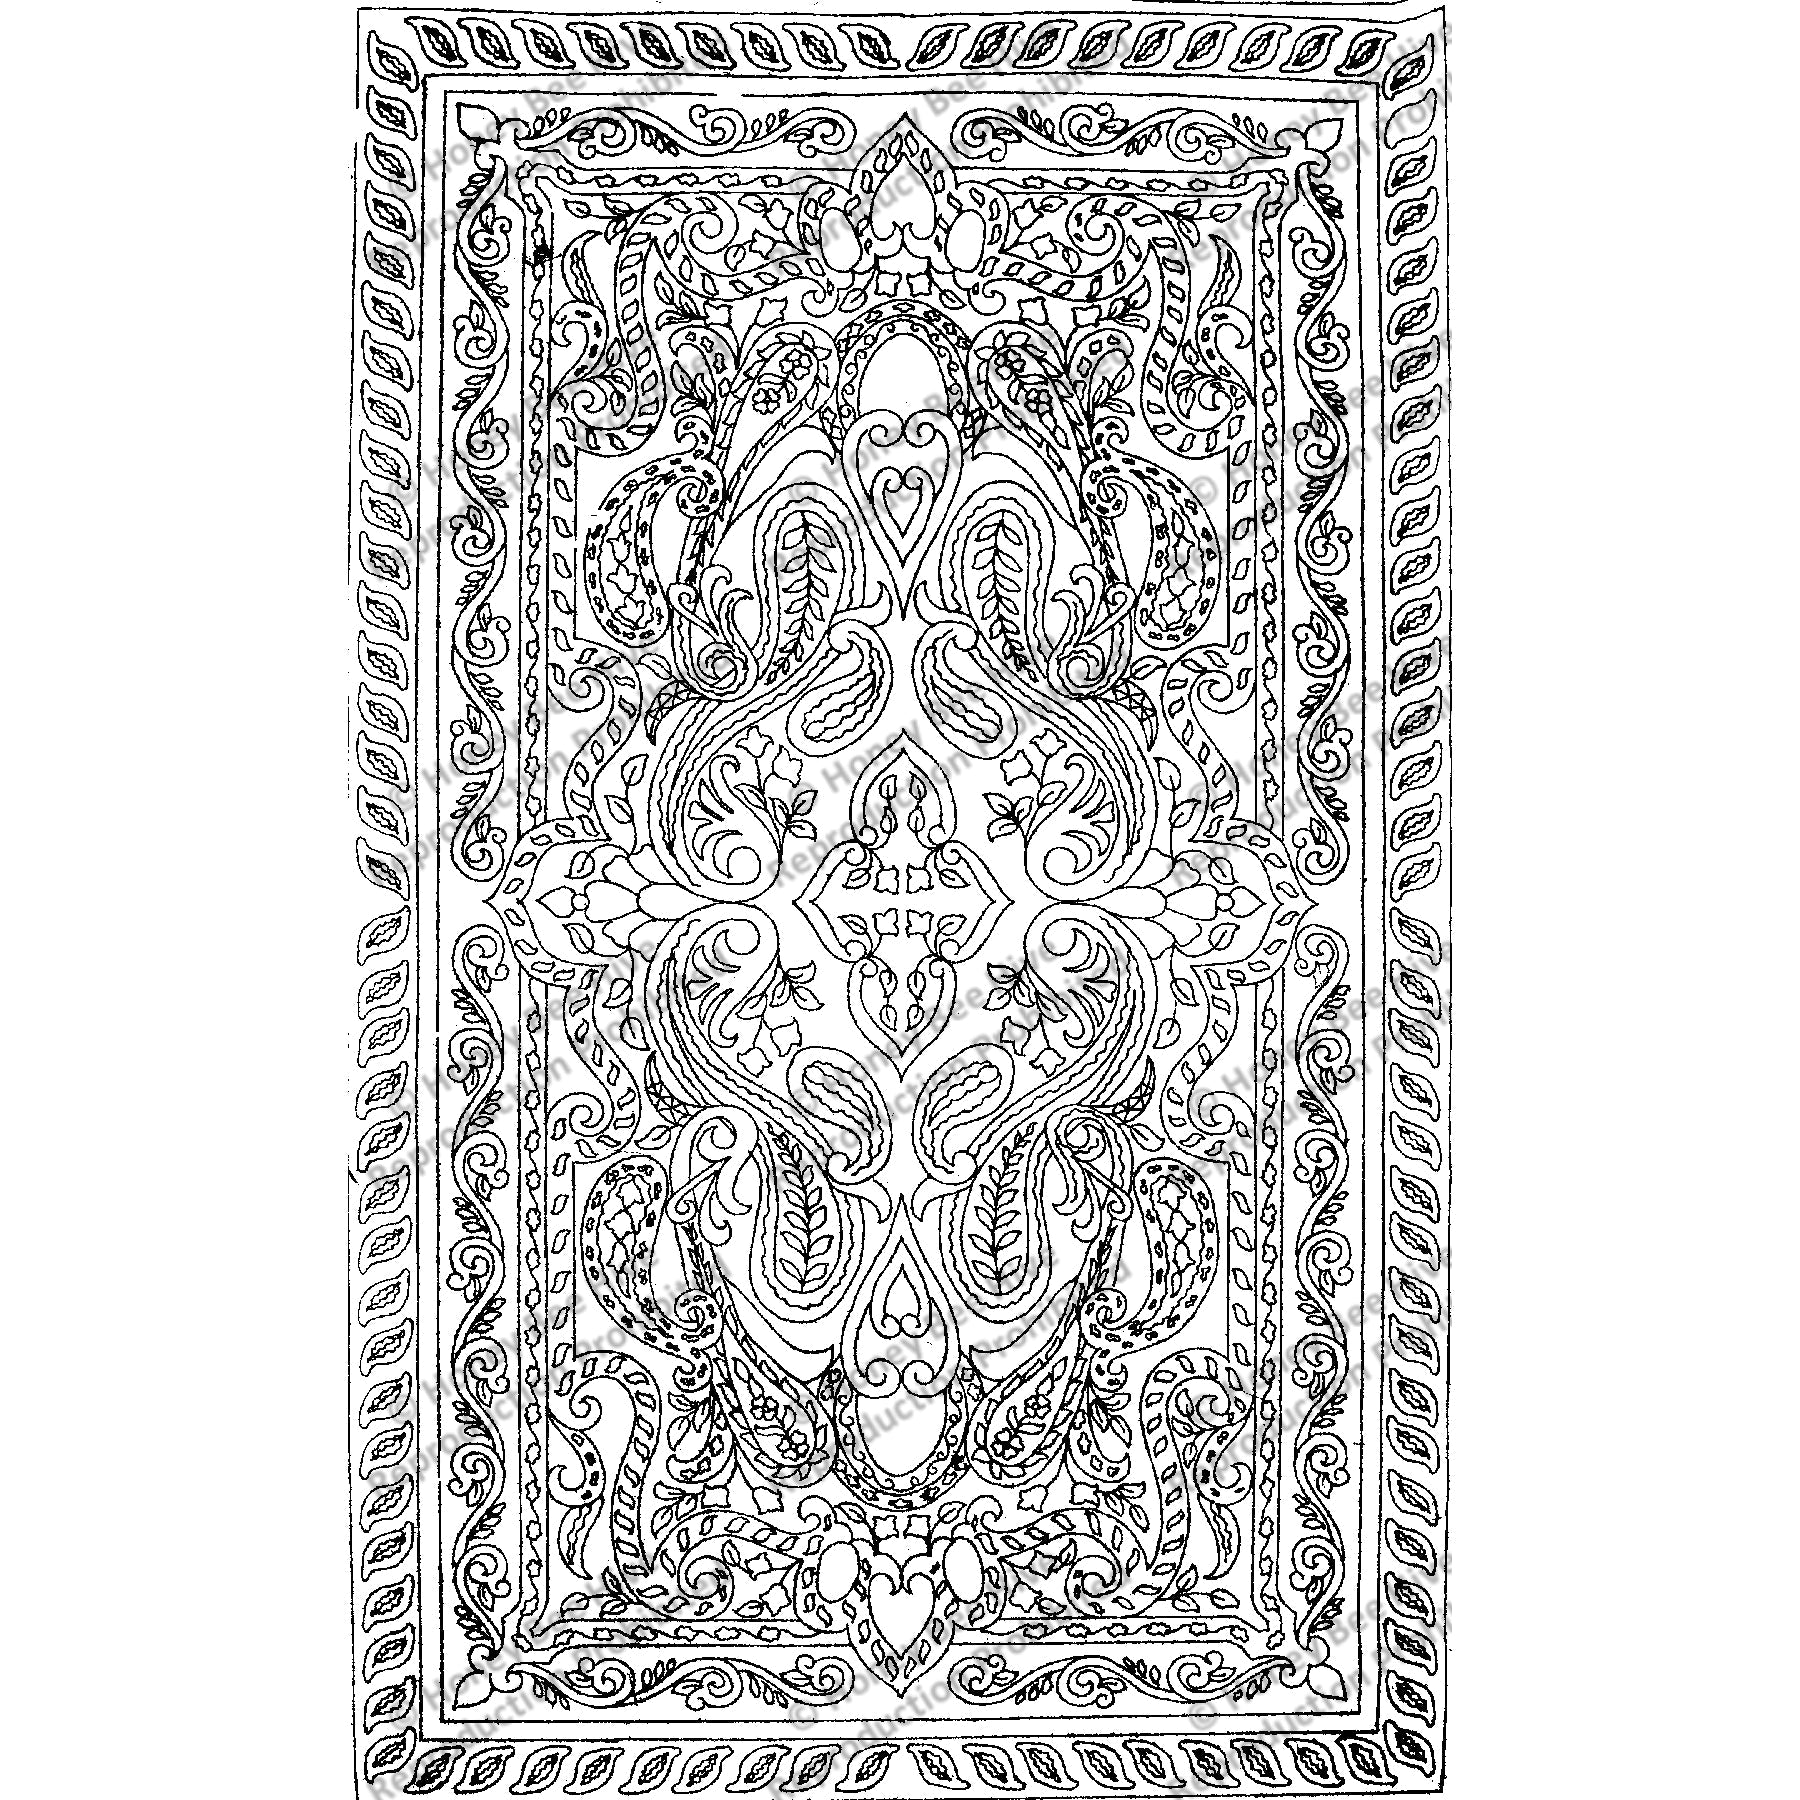 Cacimaeres, rug hooking pattern